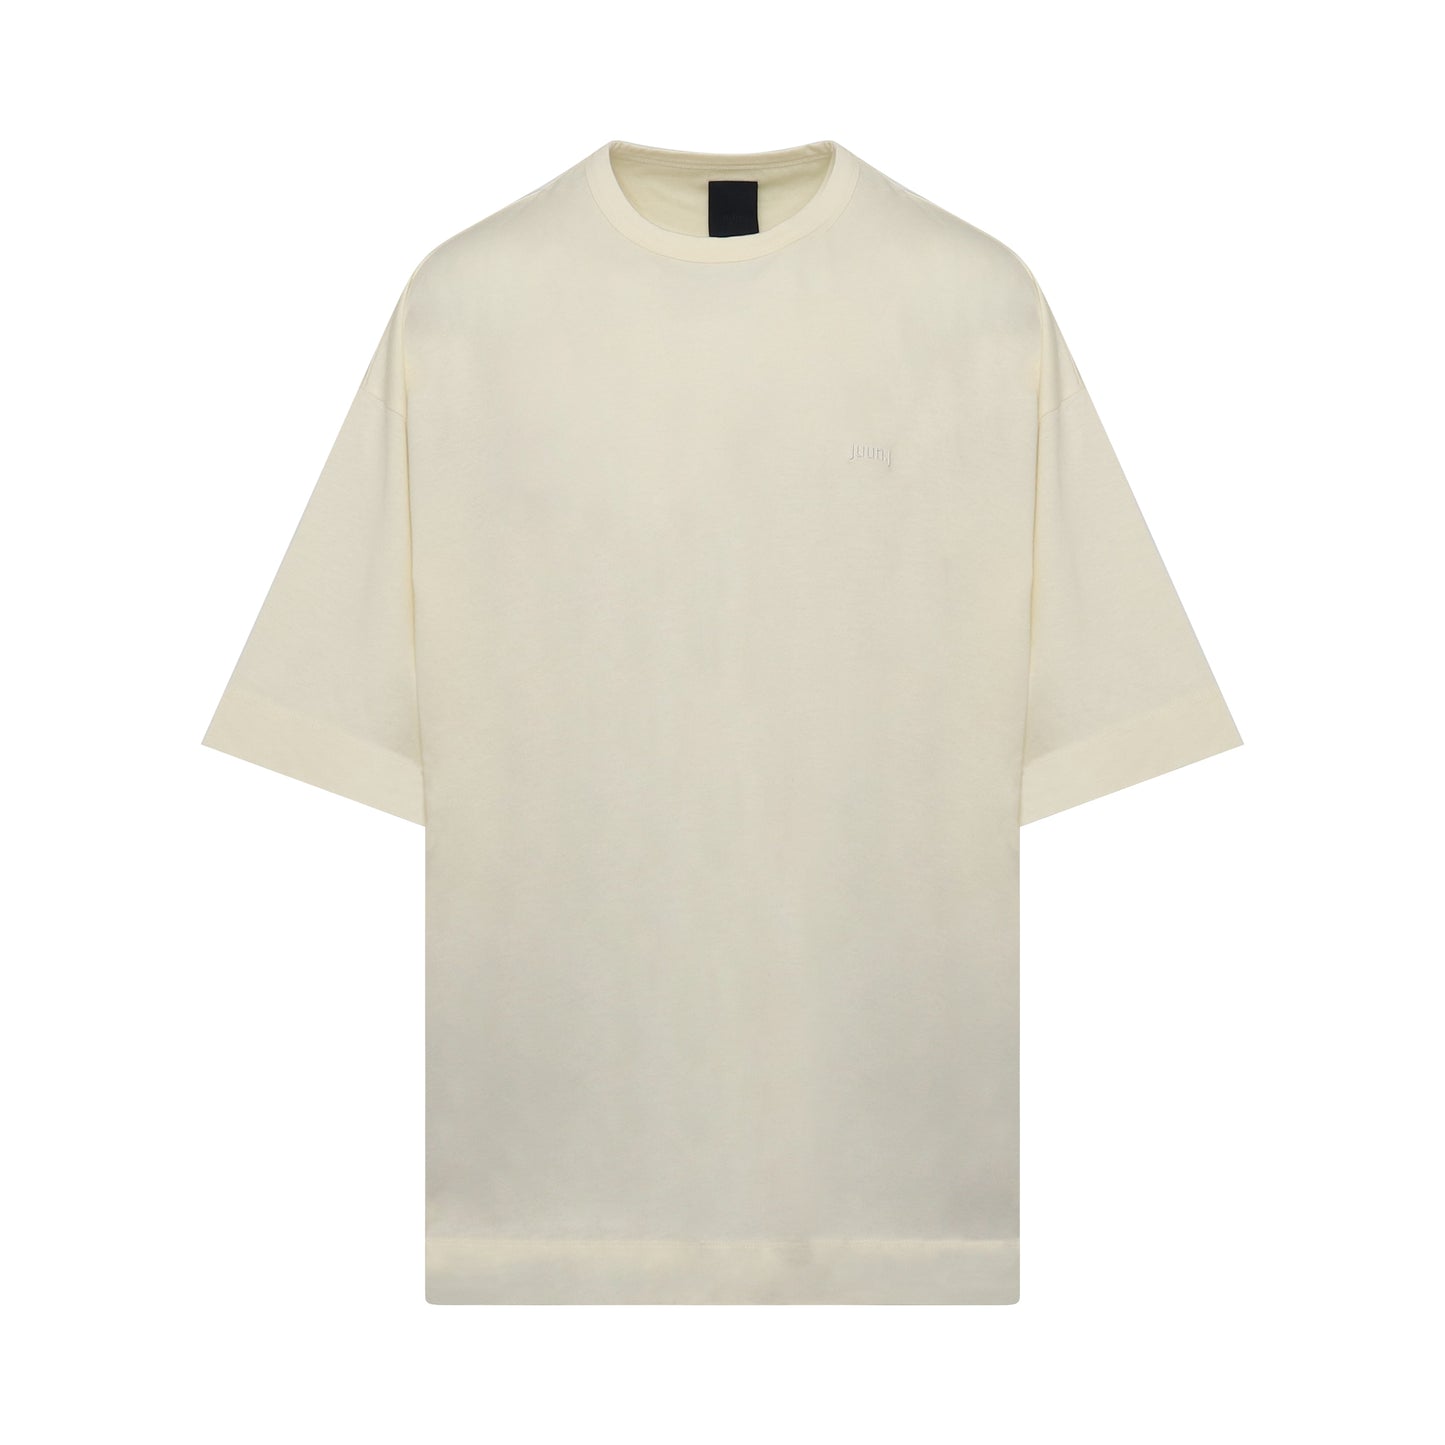 Juunj Oversize Graphic T-Shirt in Ivory